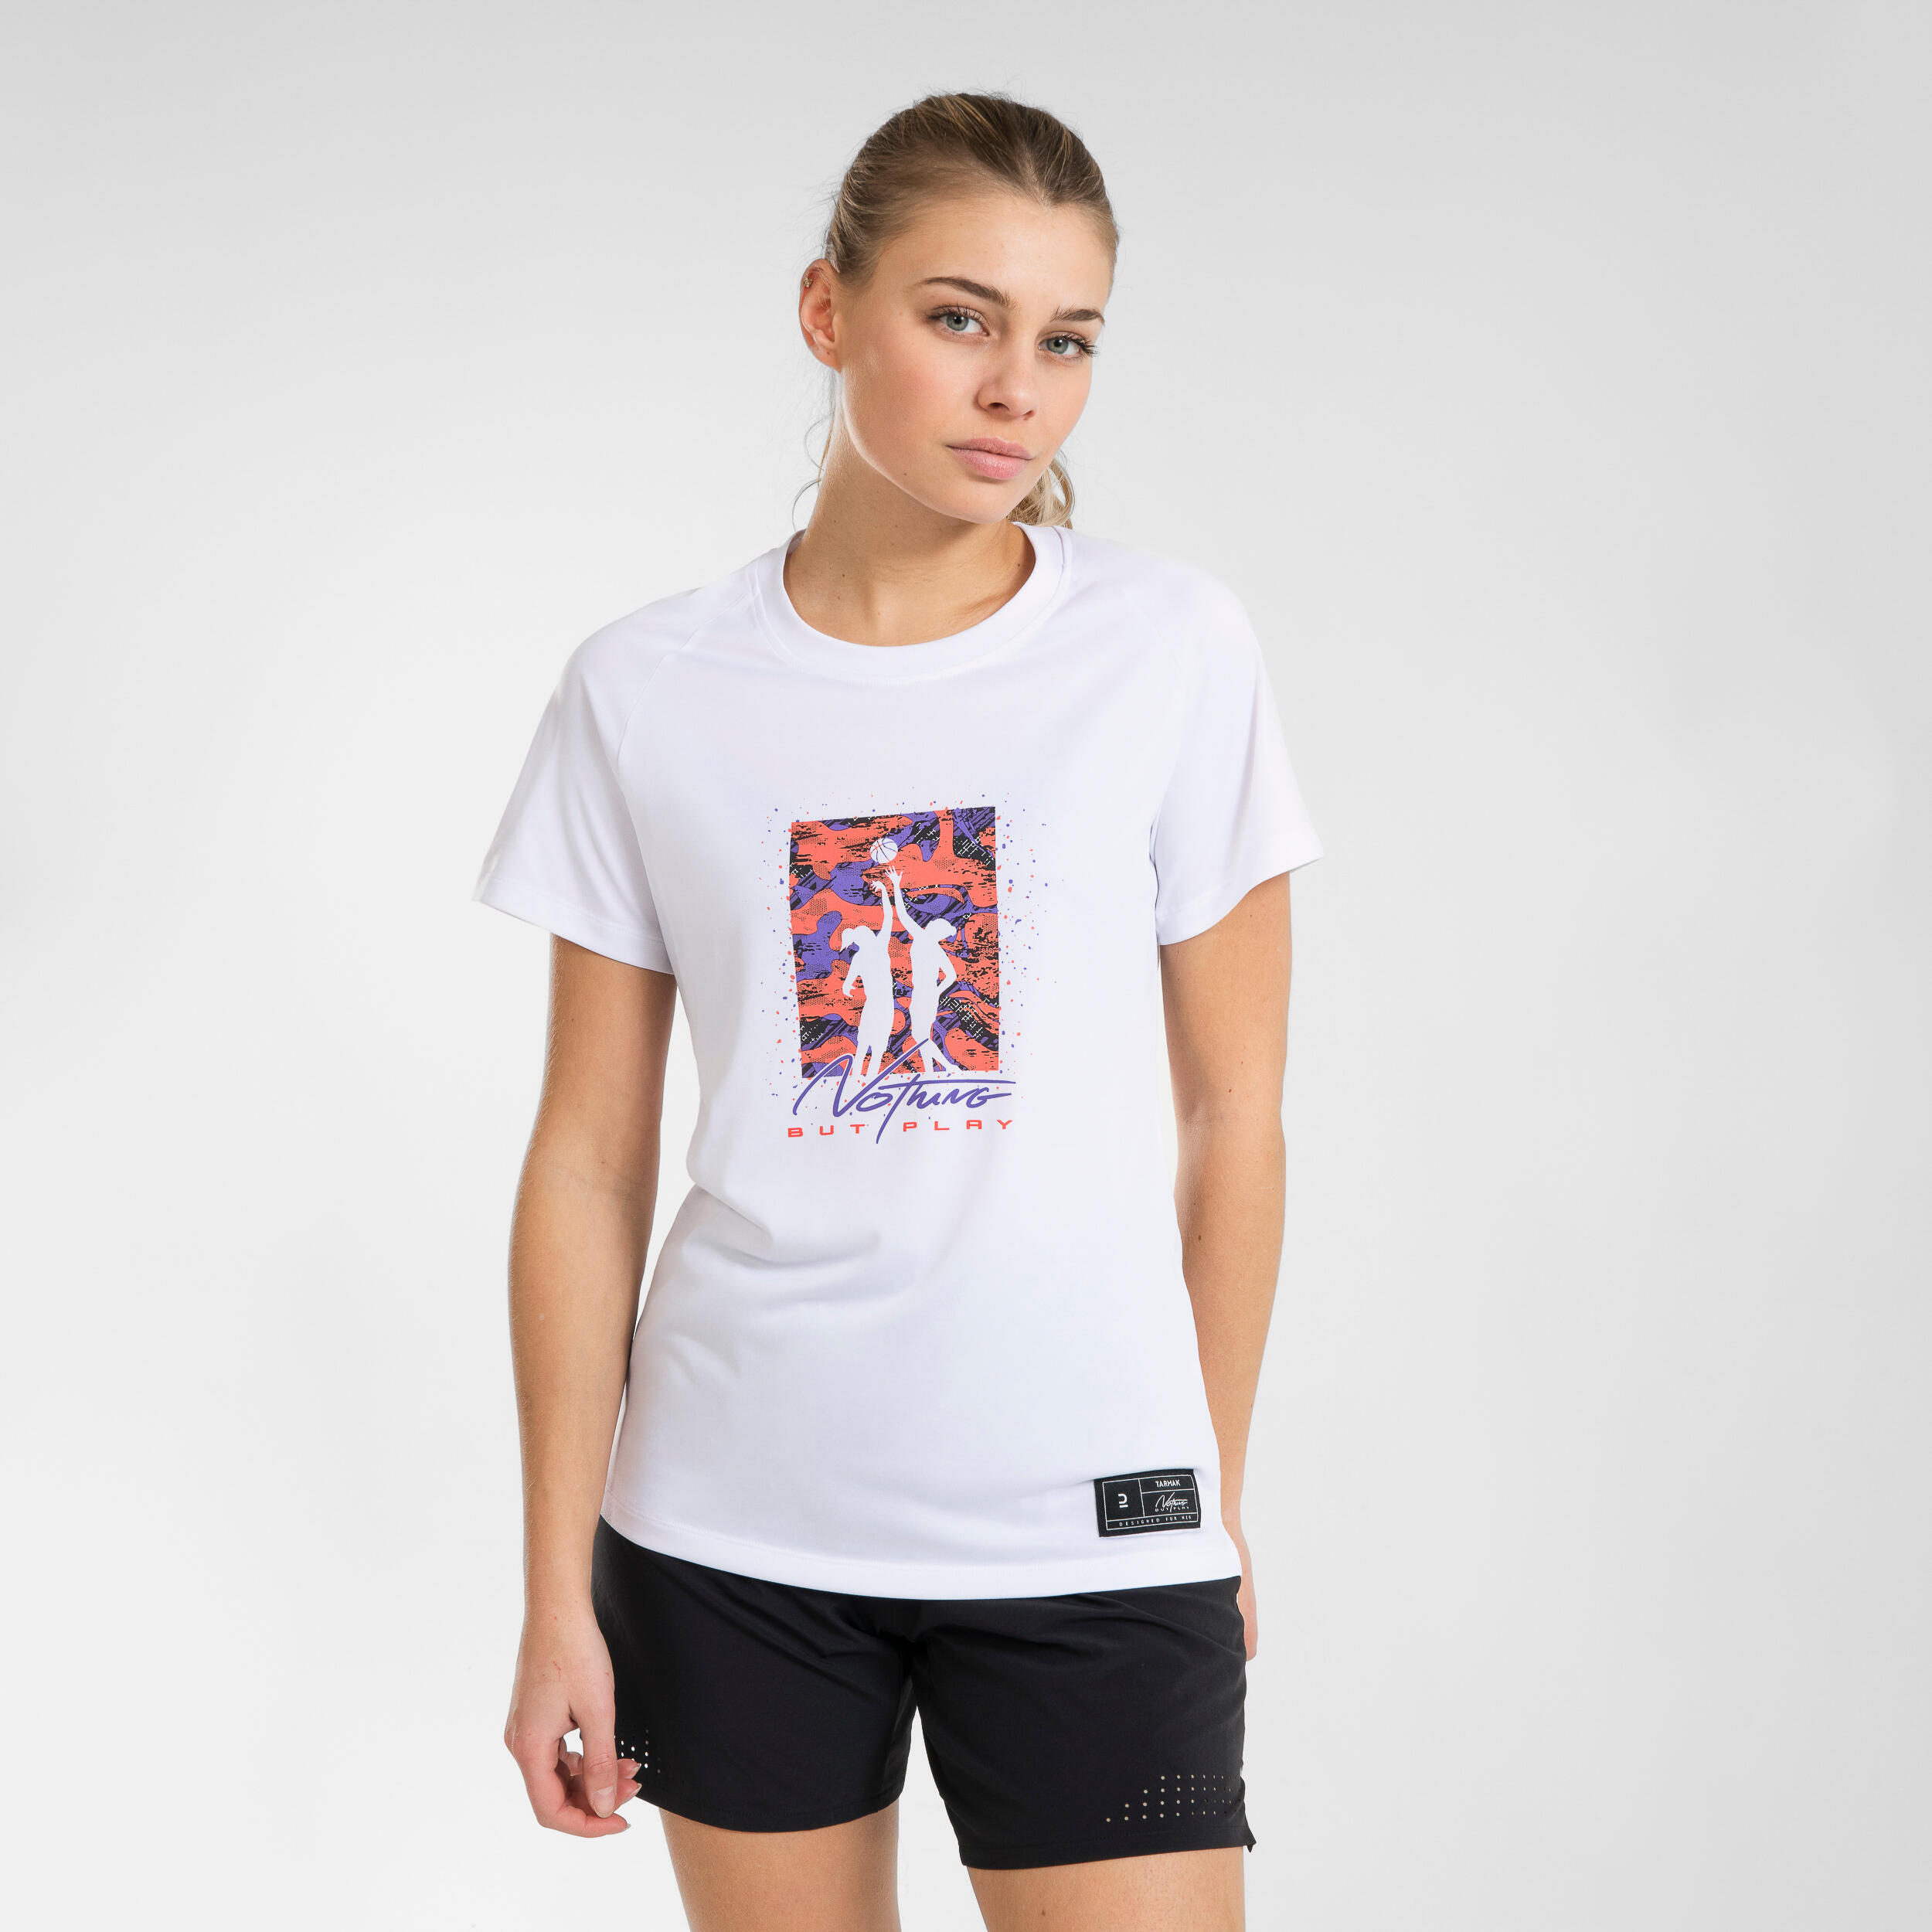 Women's Intermediate Basketball T-Shirt / Jersey TS500 - White 1/4